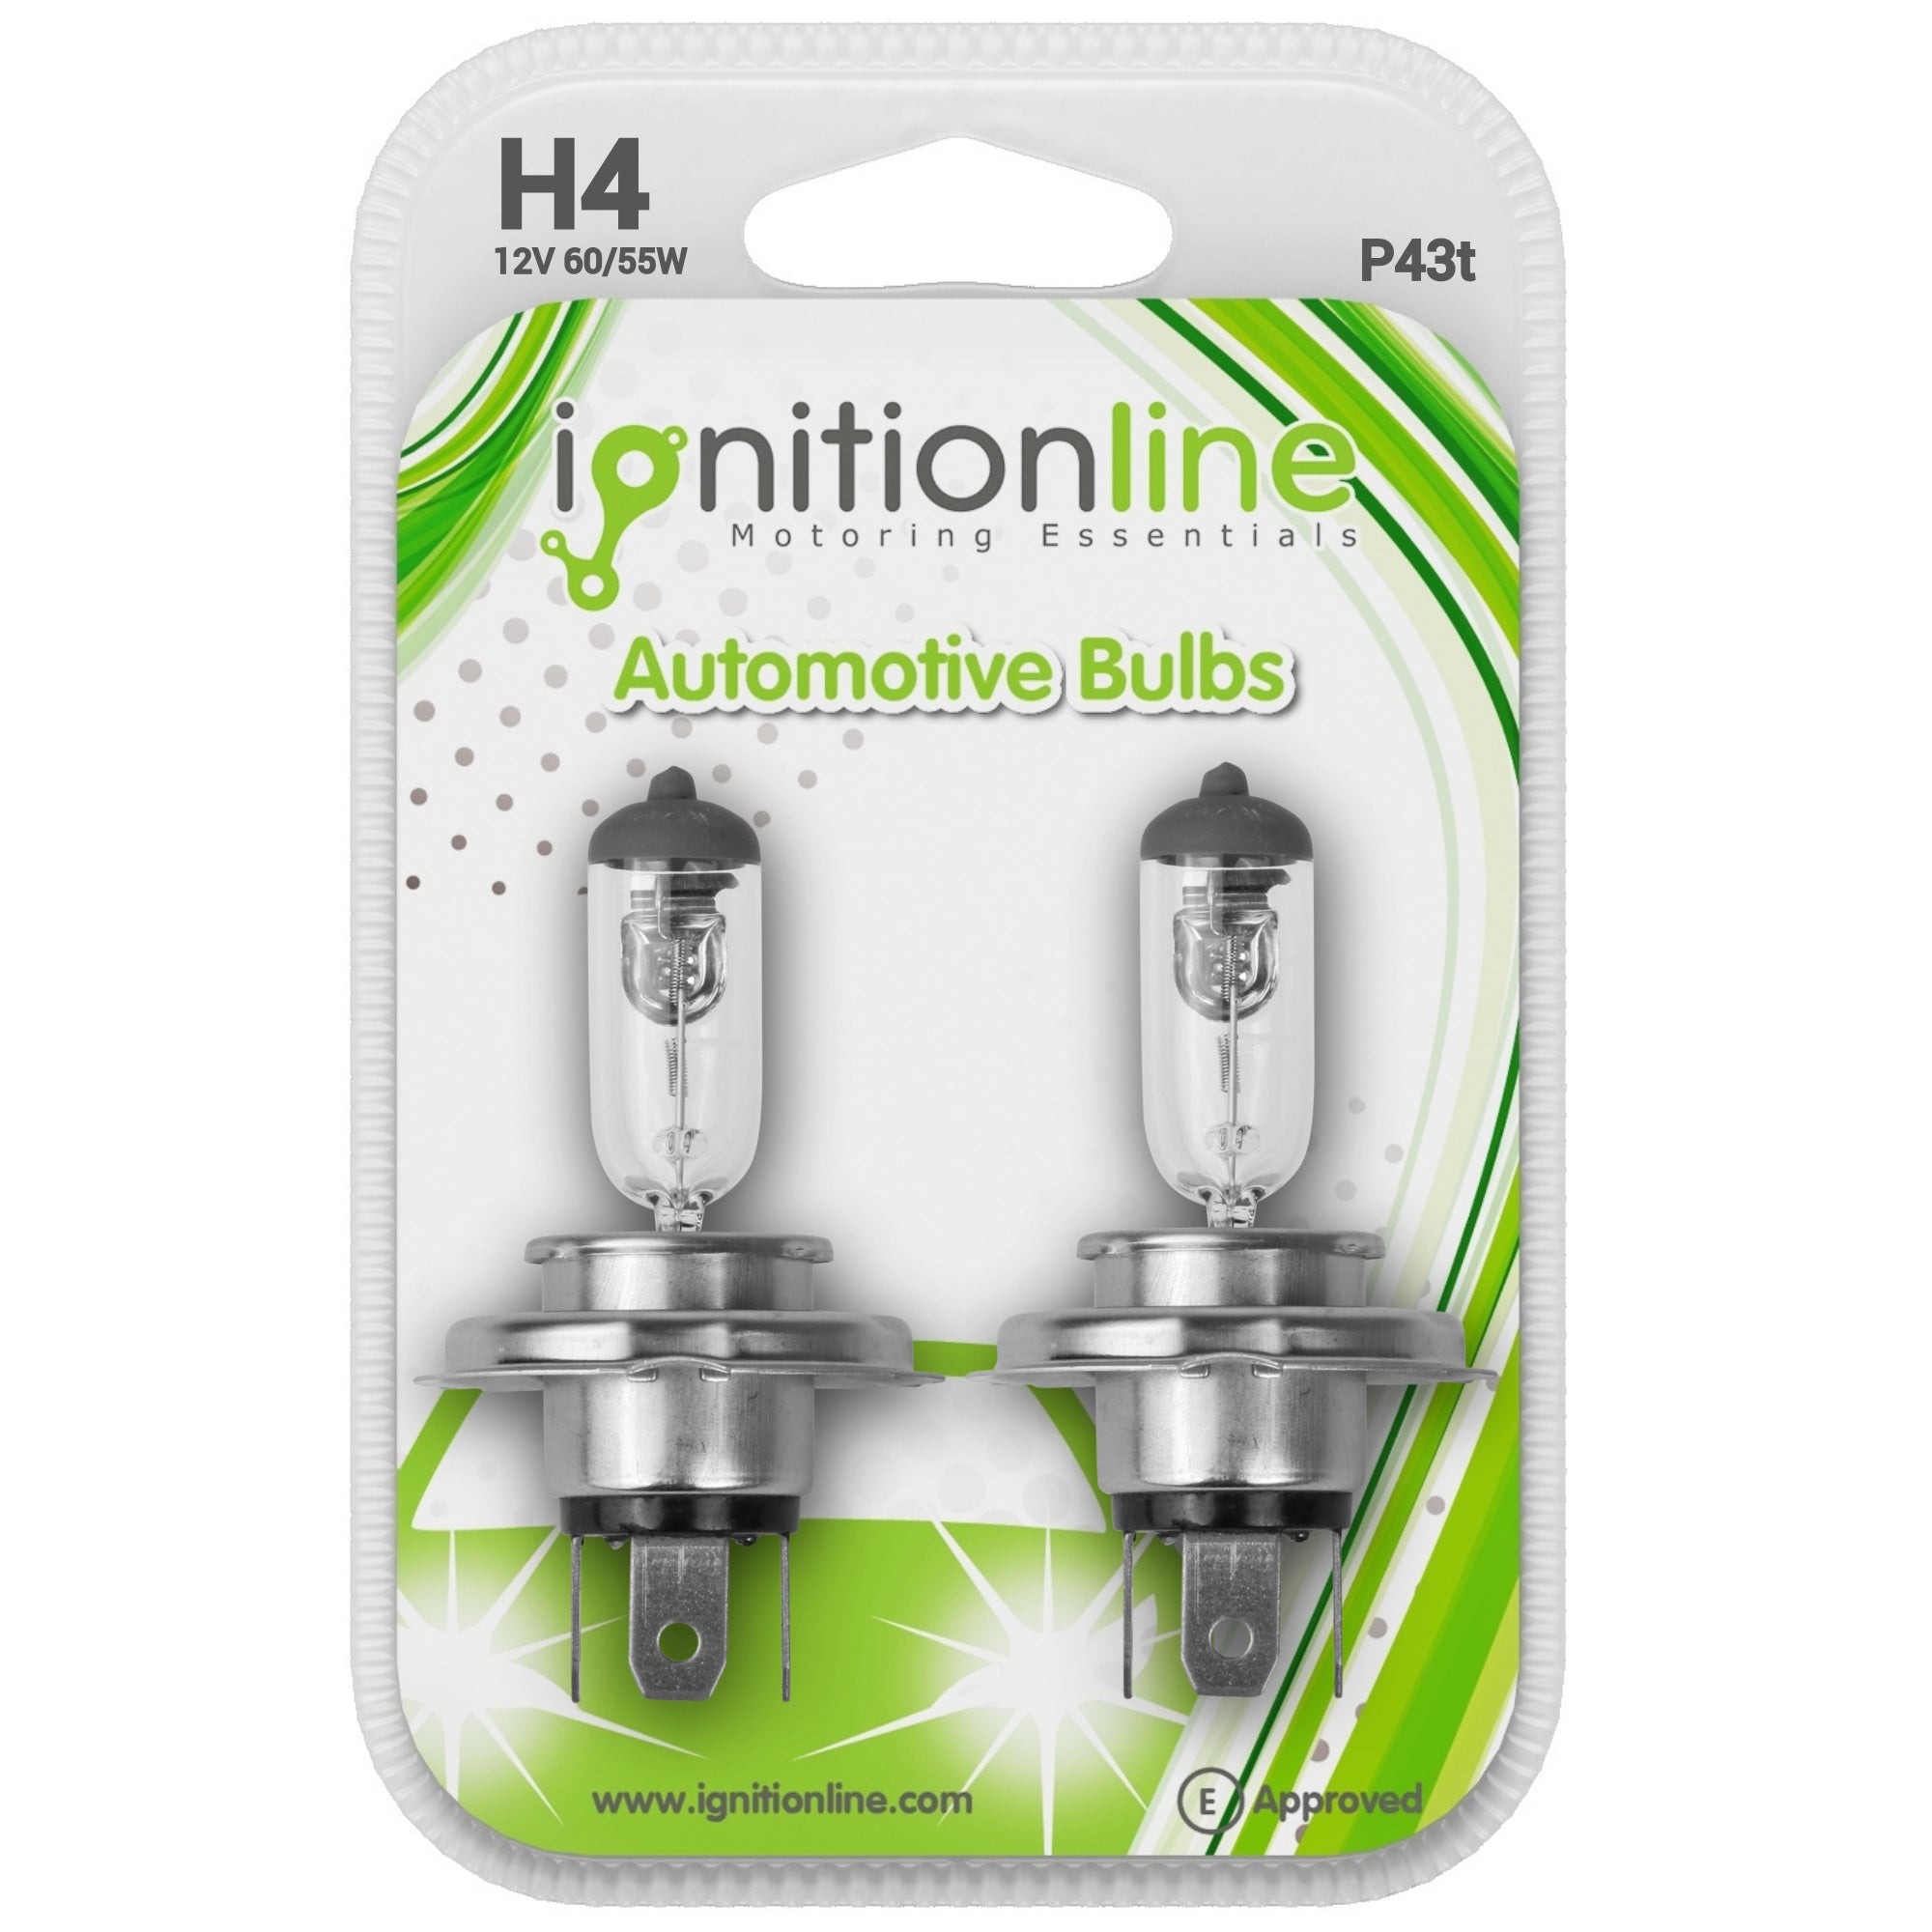 IgnitionLine H4 12V 60/55W Halogen Headlight Bulbs (Twin Pack)